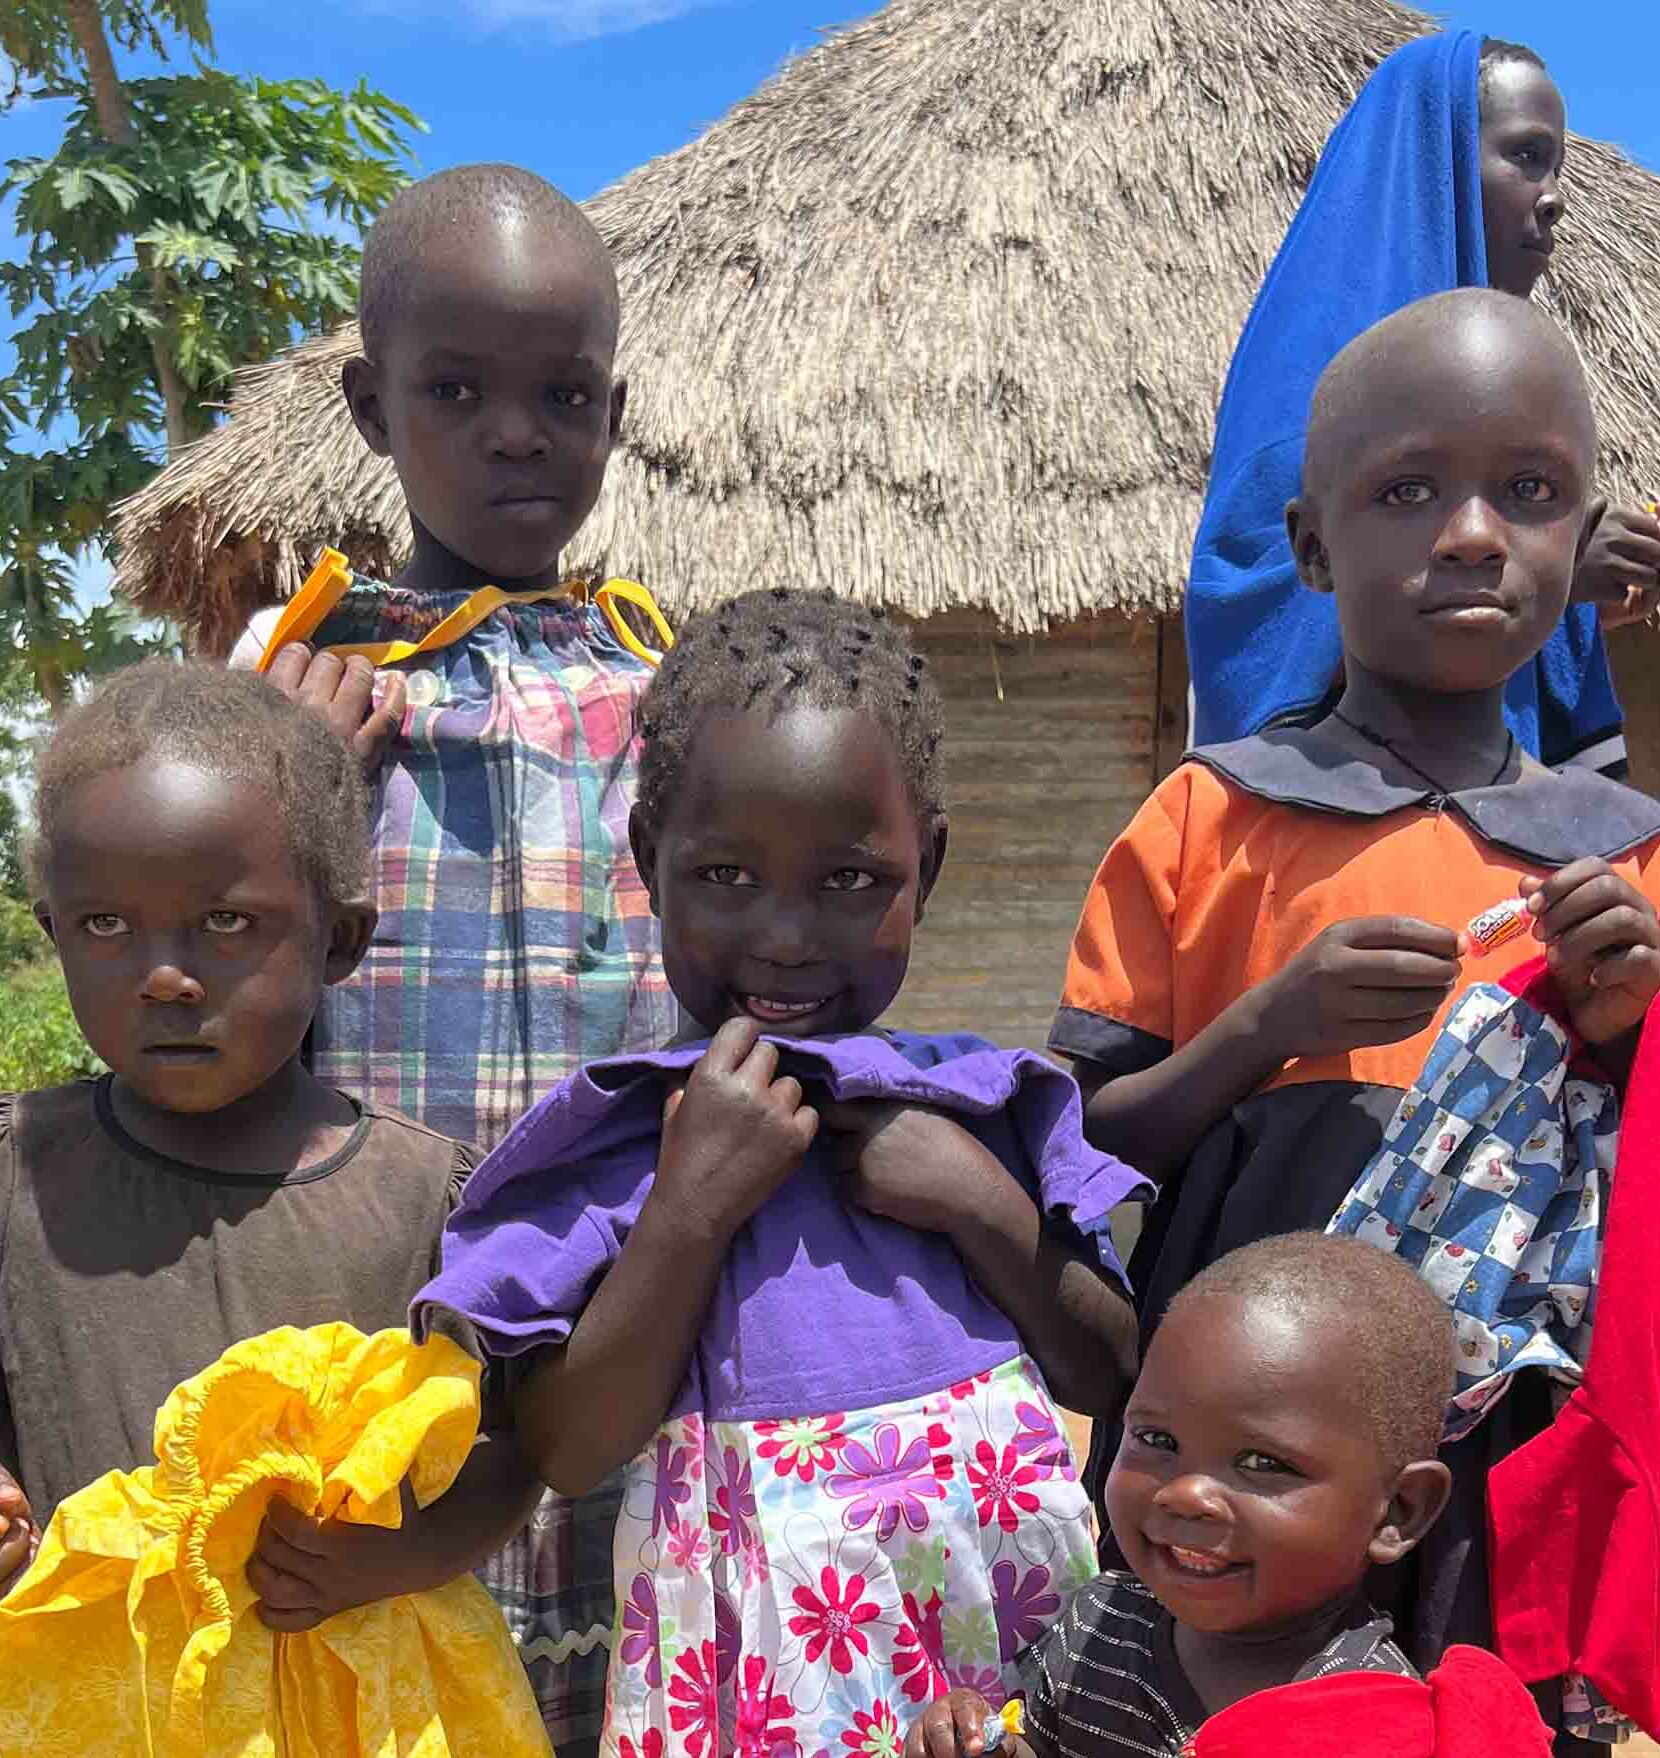 Children in Uganda holding dresses and smiling